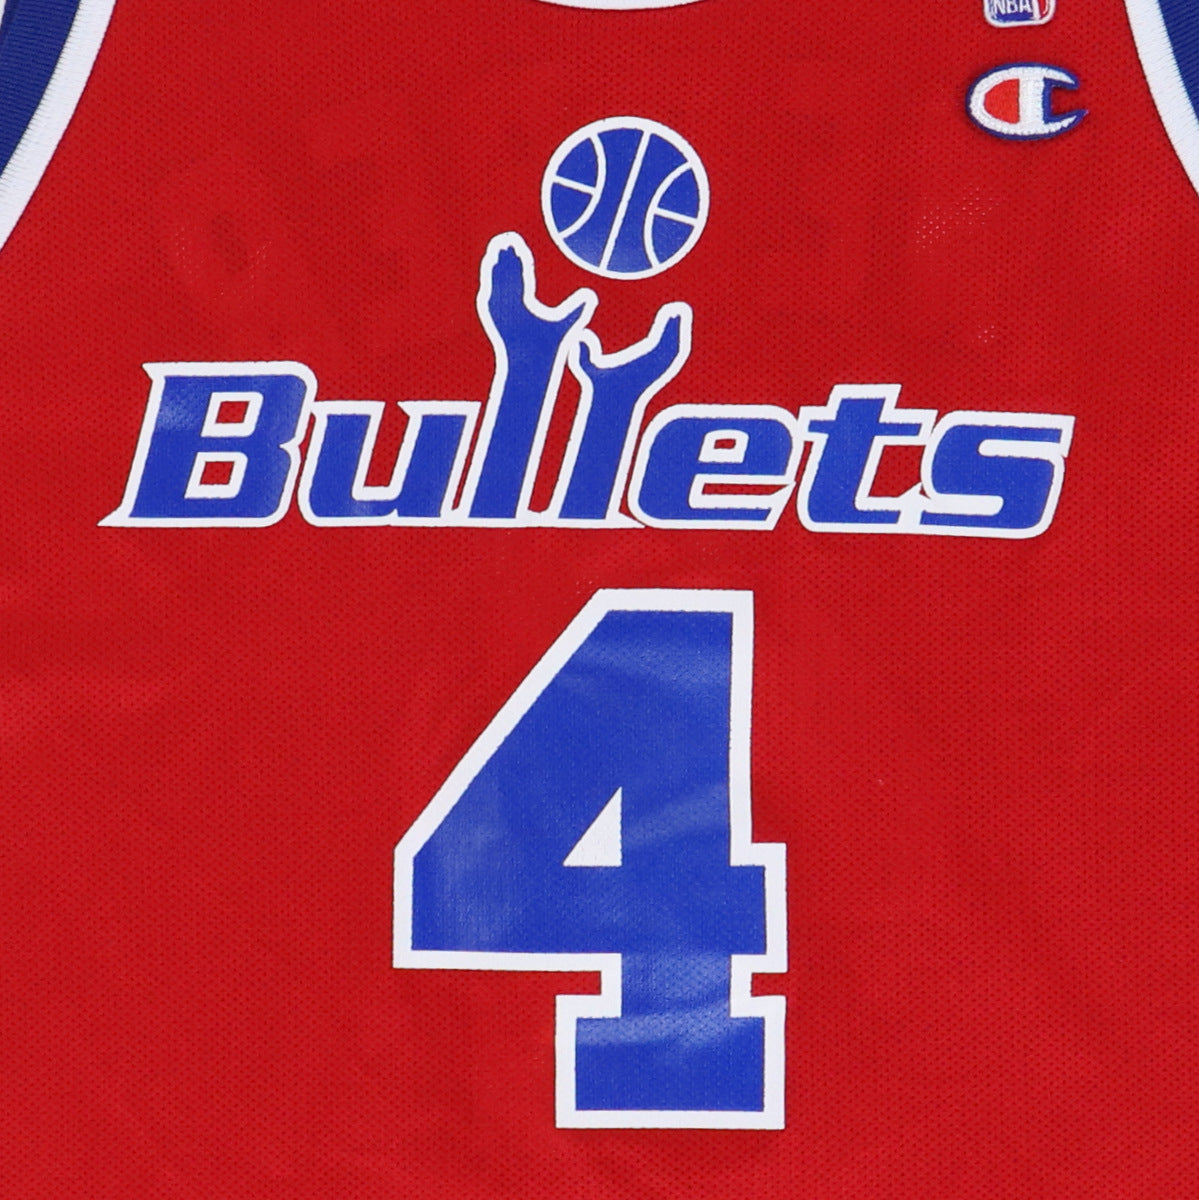 1990s Chris Webber Washington Bullets NBA Basketball Jersey